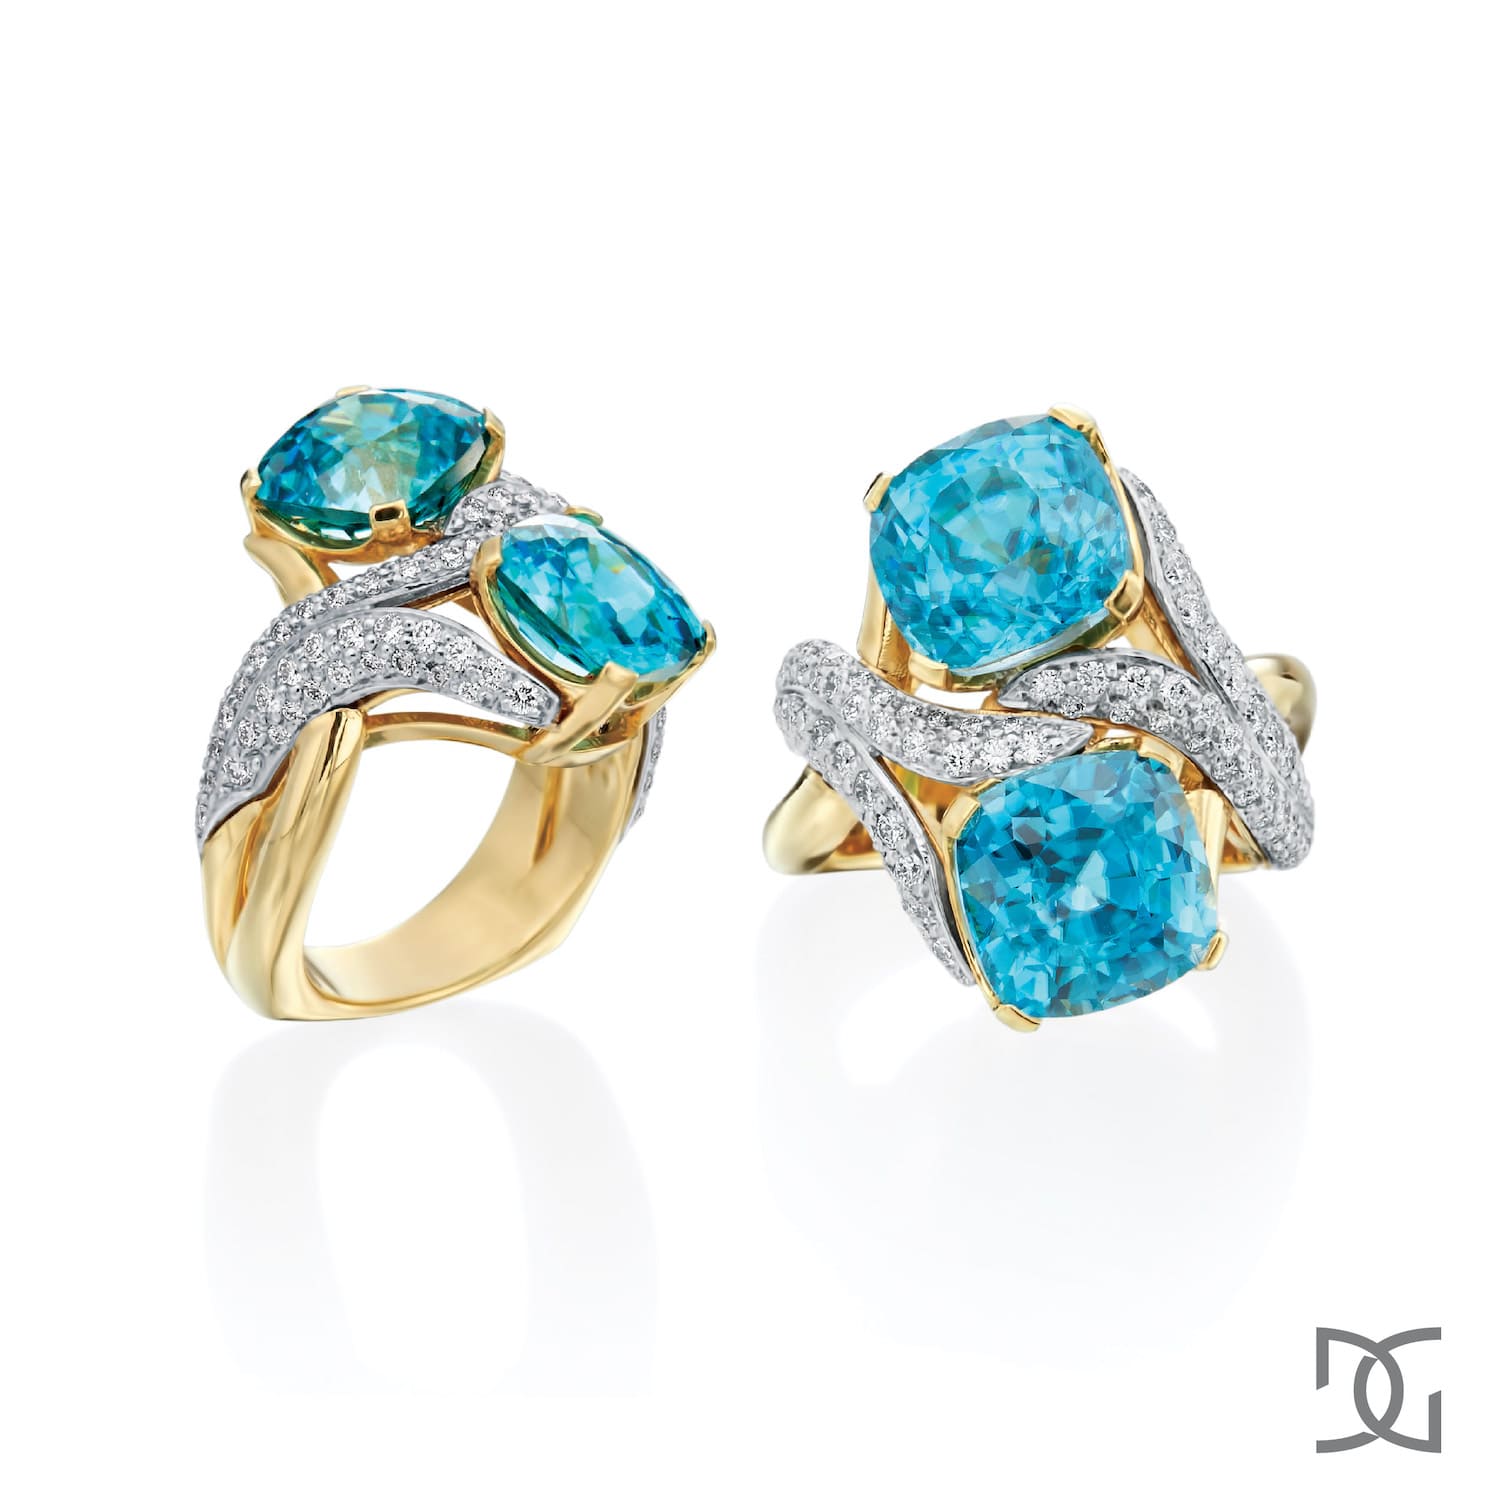 2 blue zircon and diamond rings